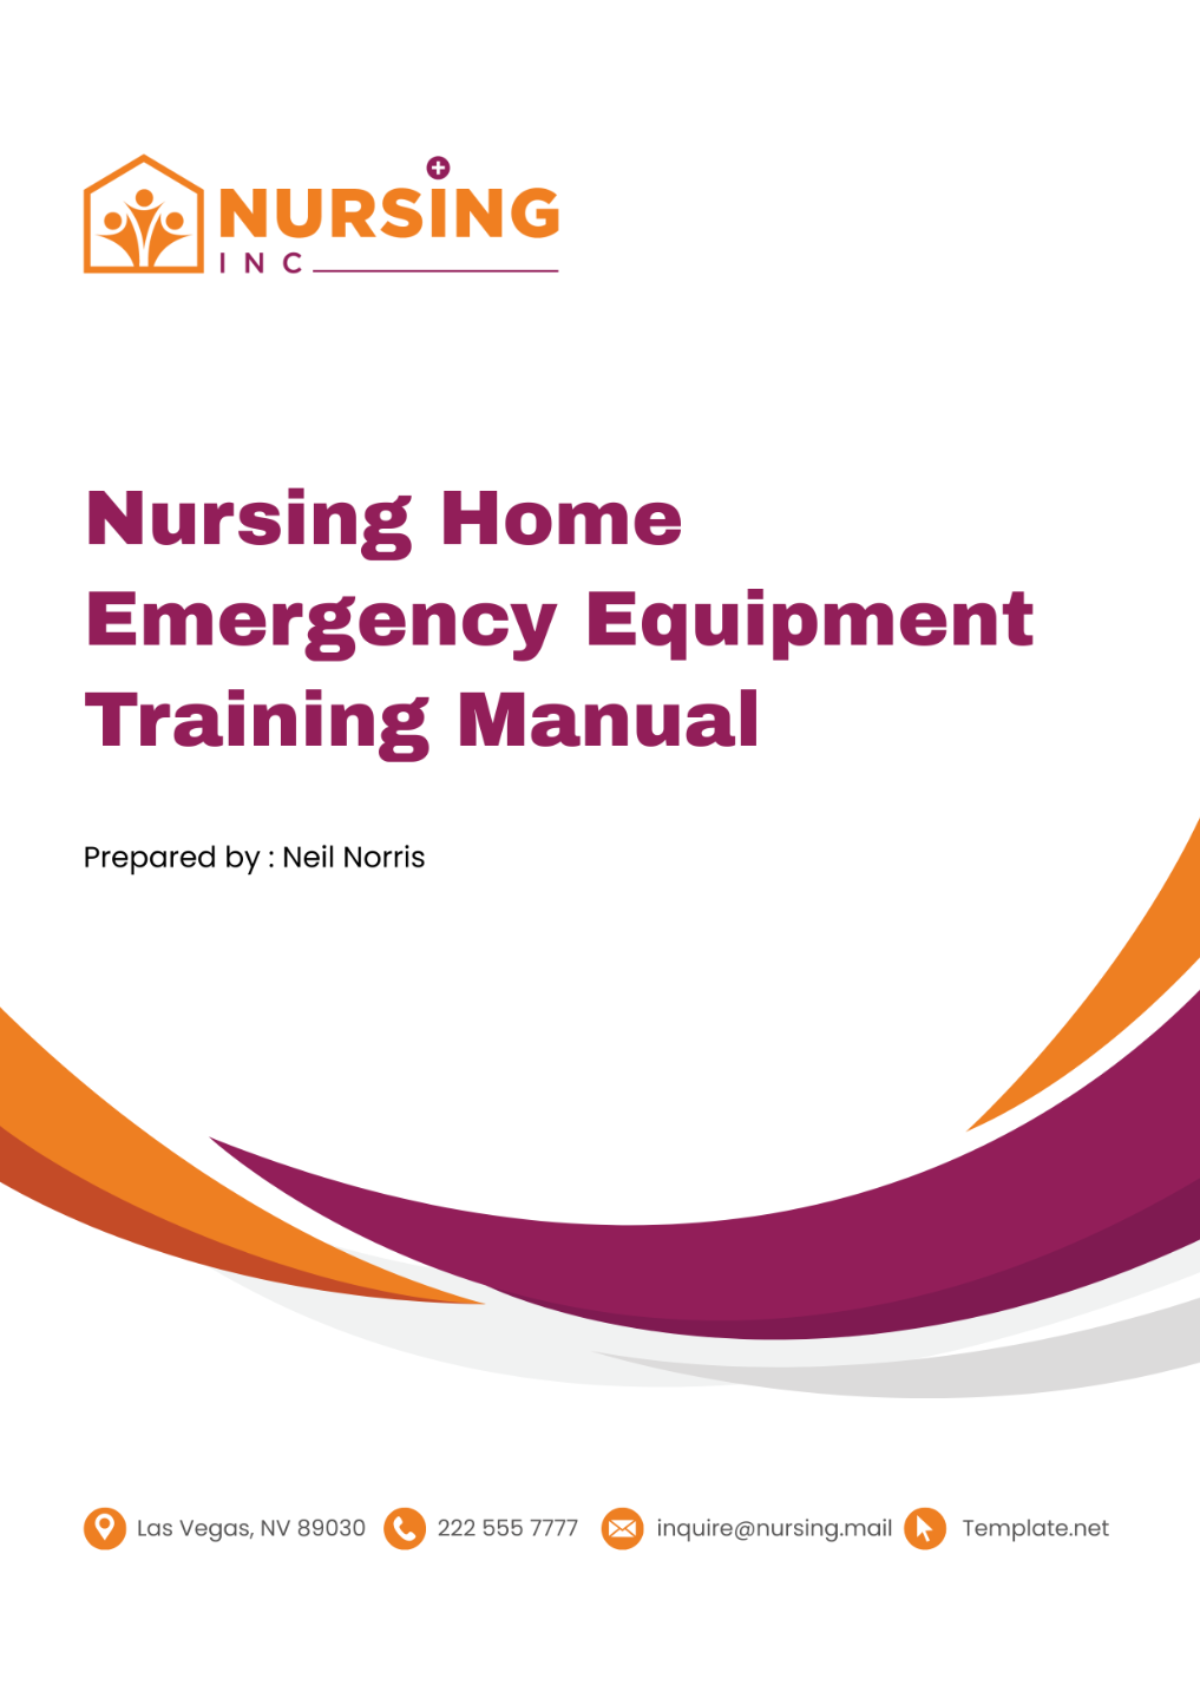 Nursing Home Emergency Equipment Training Manual Template